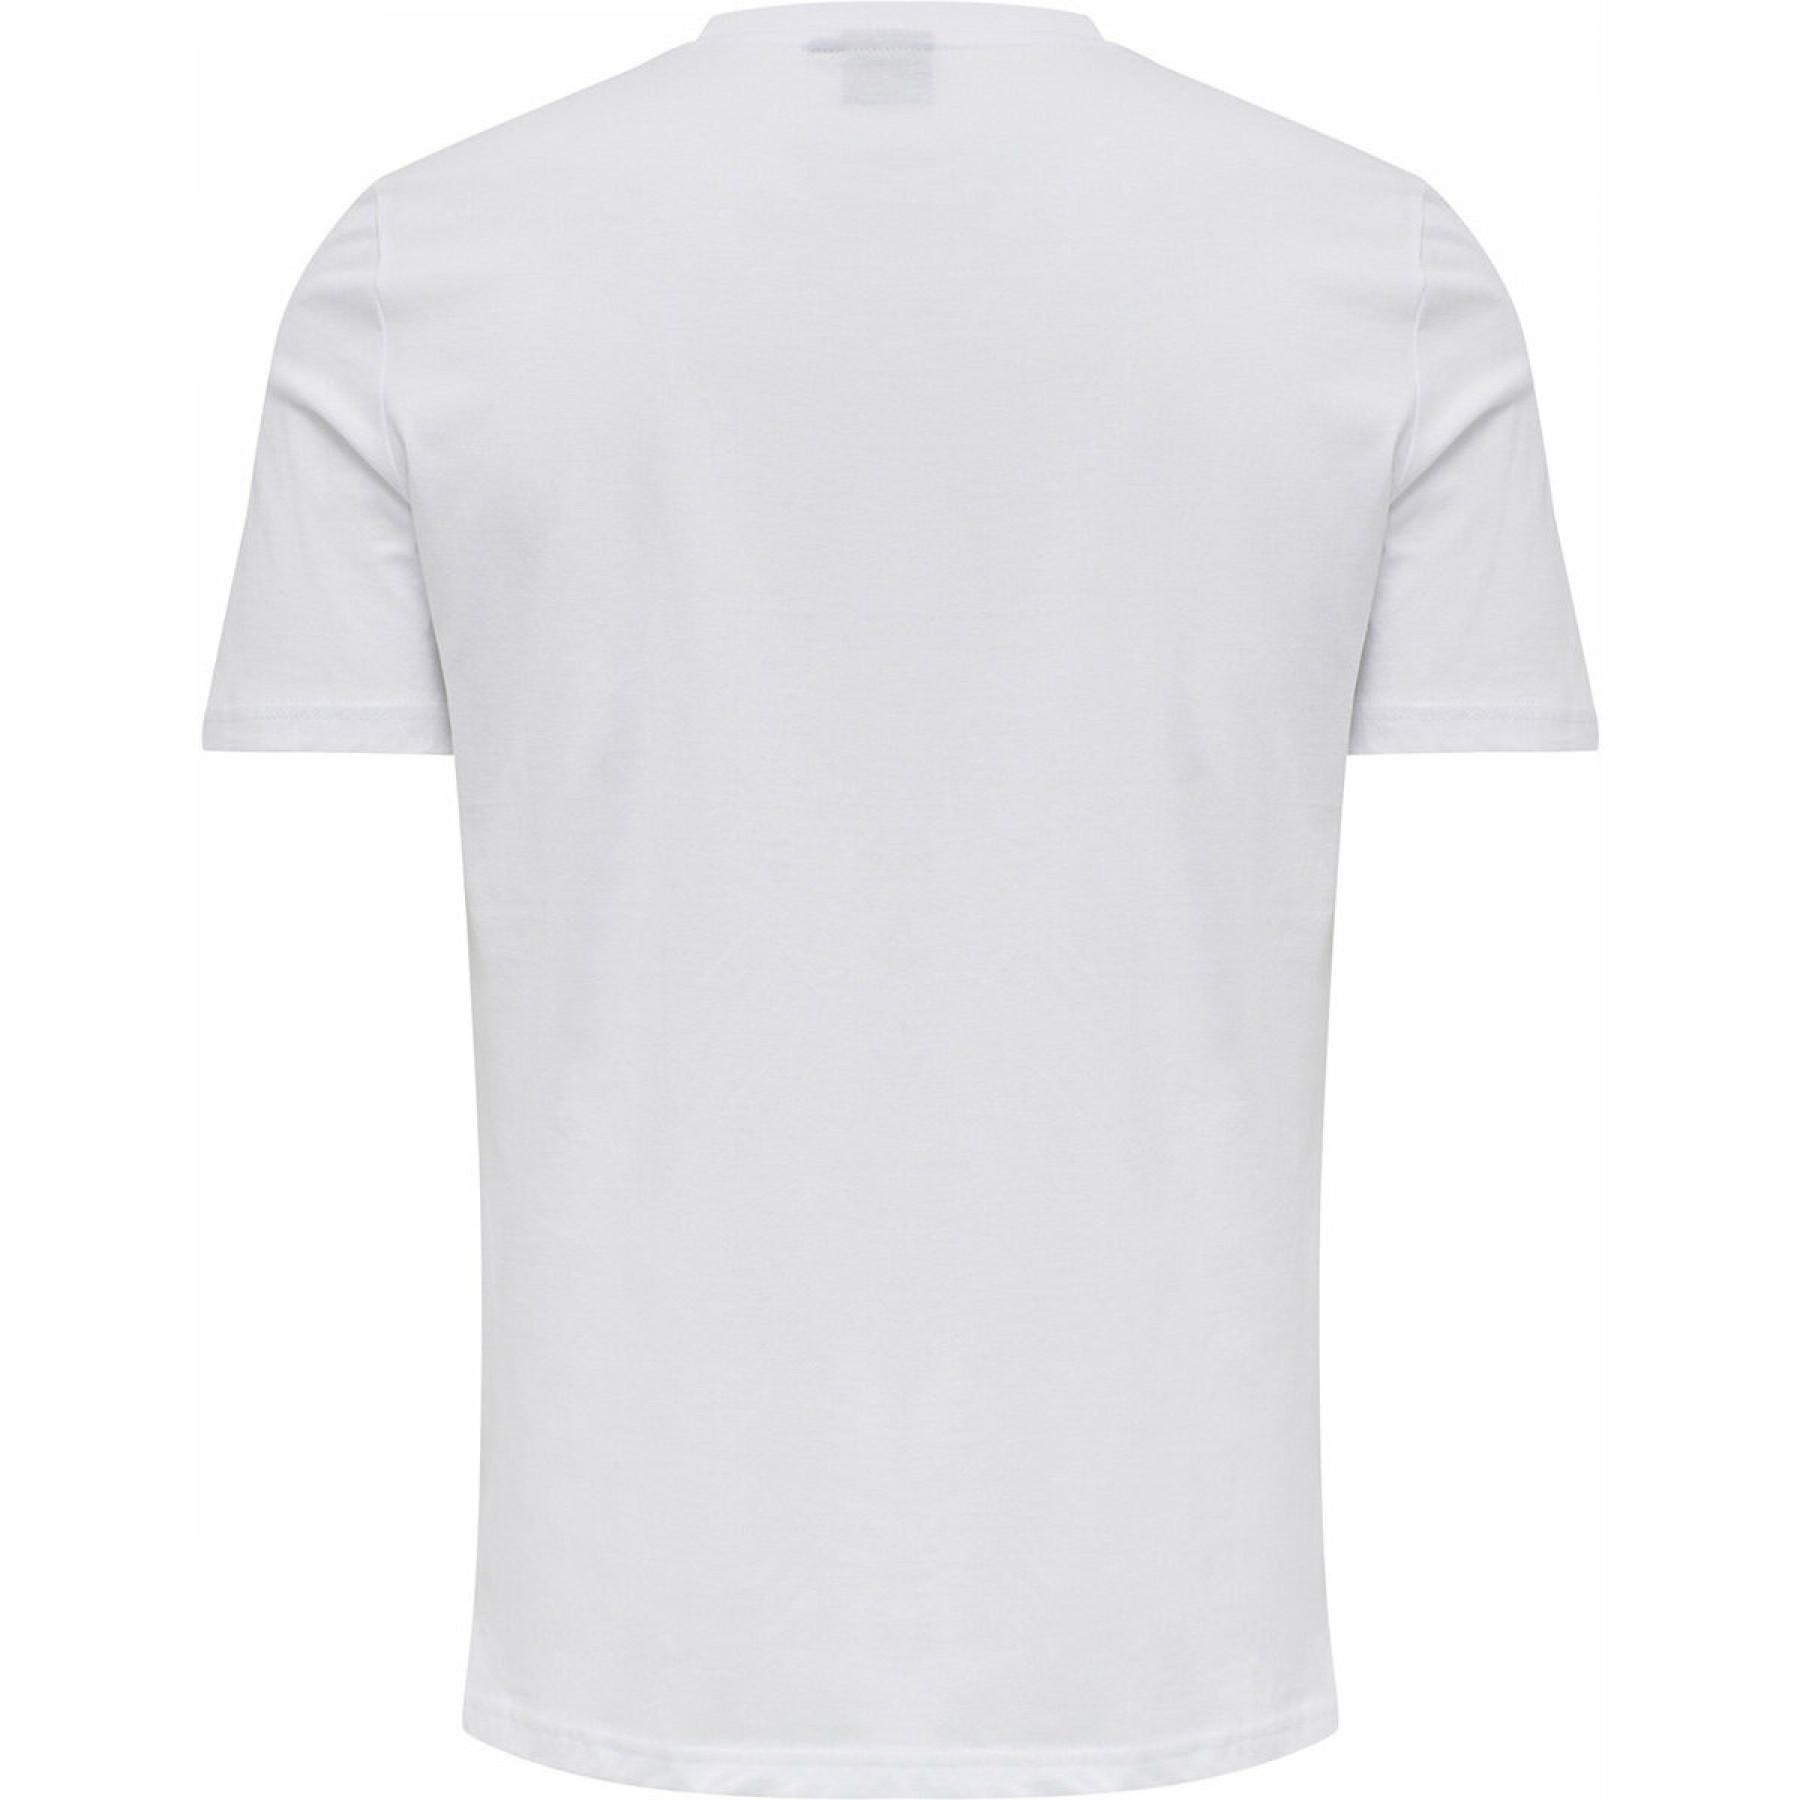 Kortärmad T-shirt Hummel